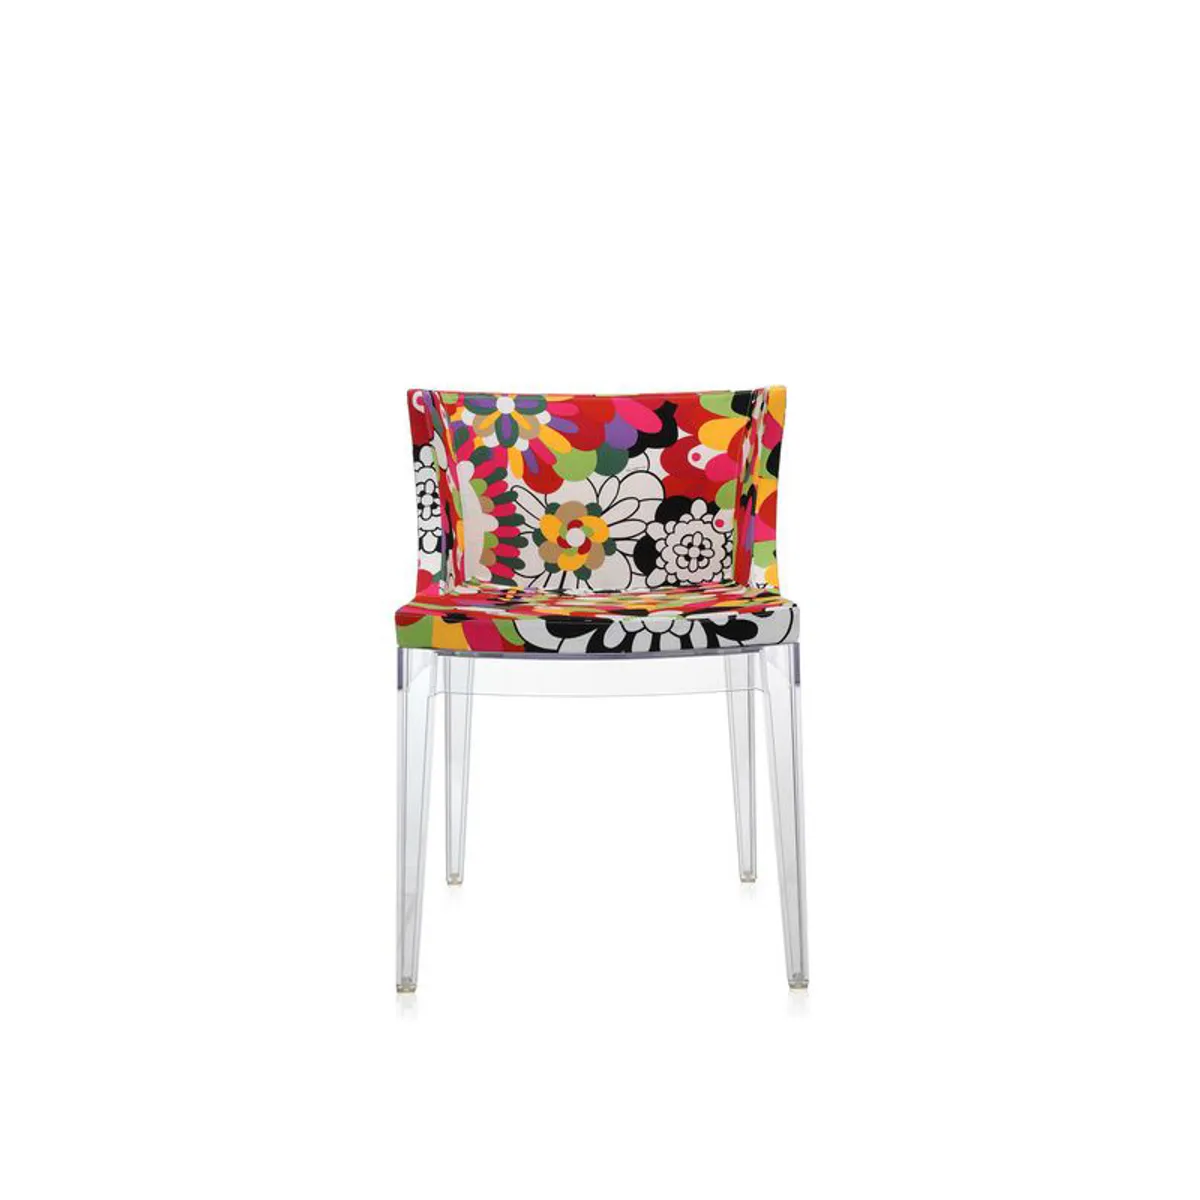 Mademoiselle Chair Redtones Verey 009